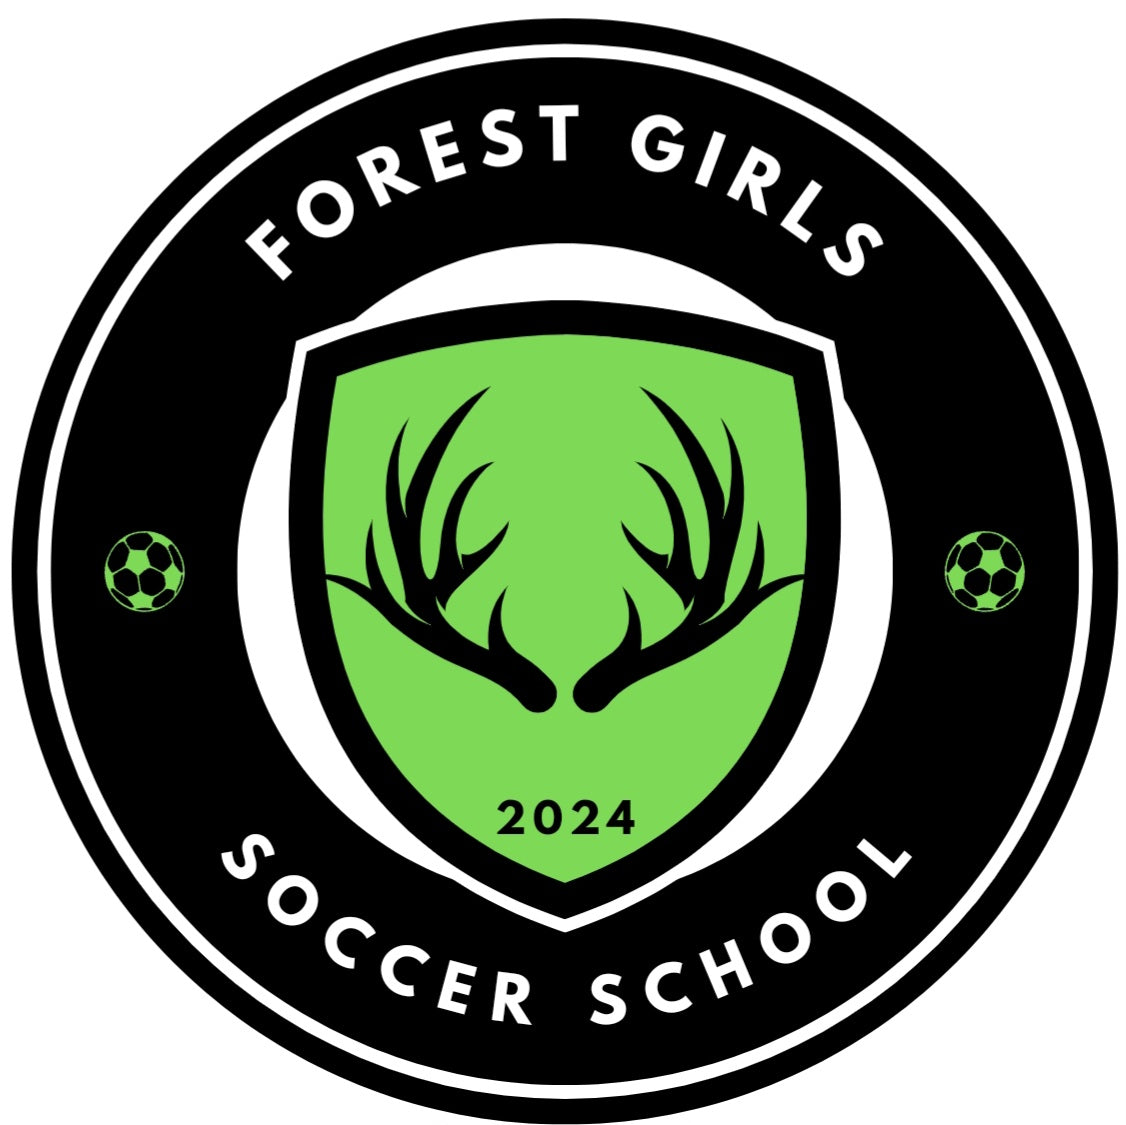 Forest Girls Soccer School